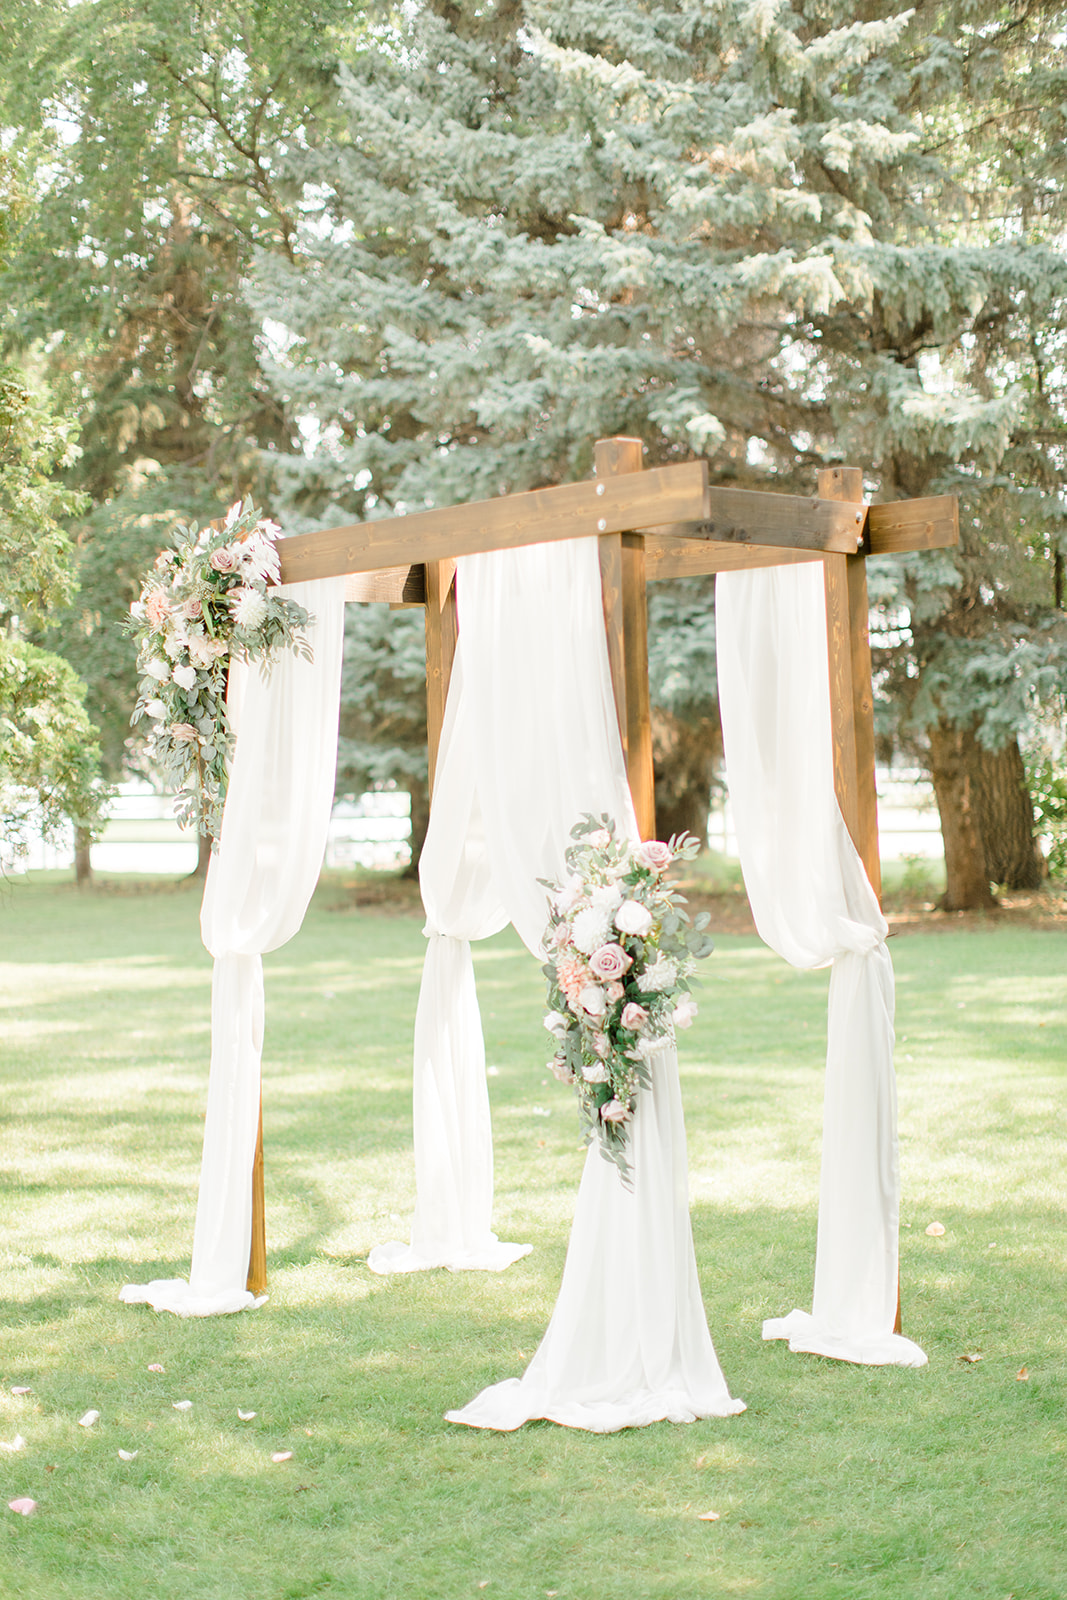 Outdoor wedding setup, outdoor summer wedding, estate wedding inspiration, blush and greenery, wedding archway